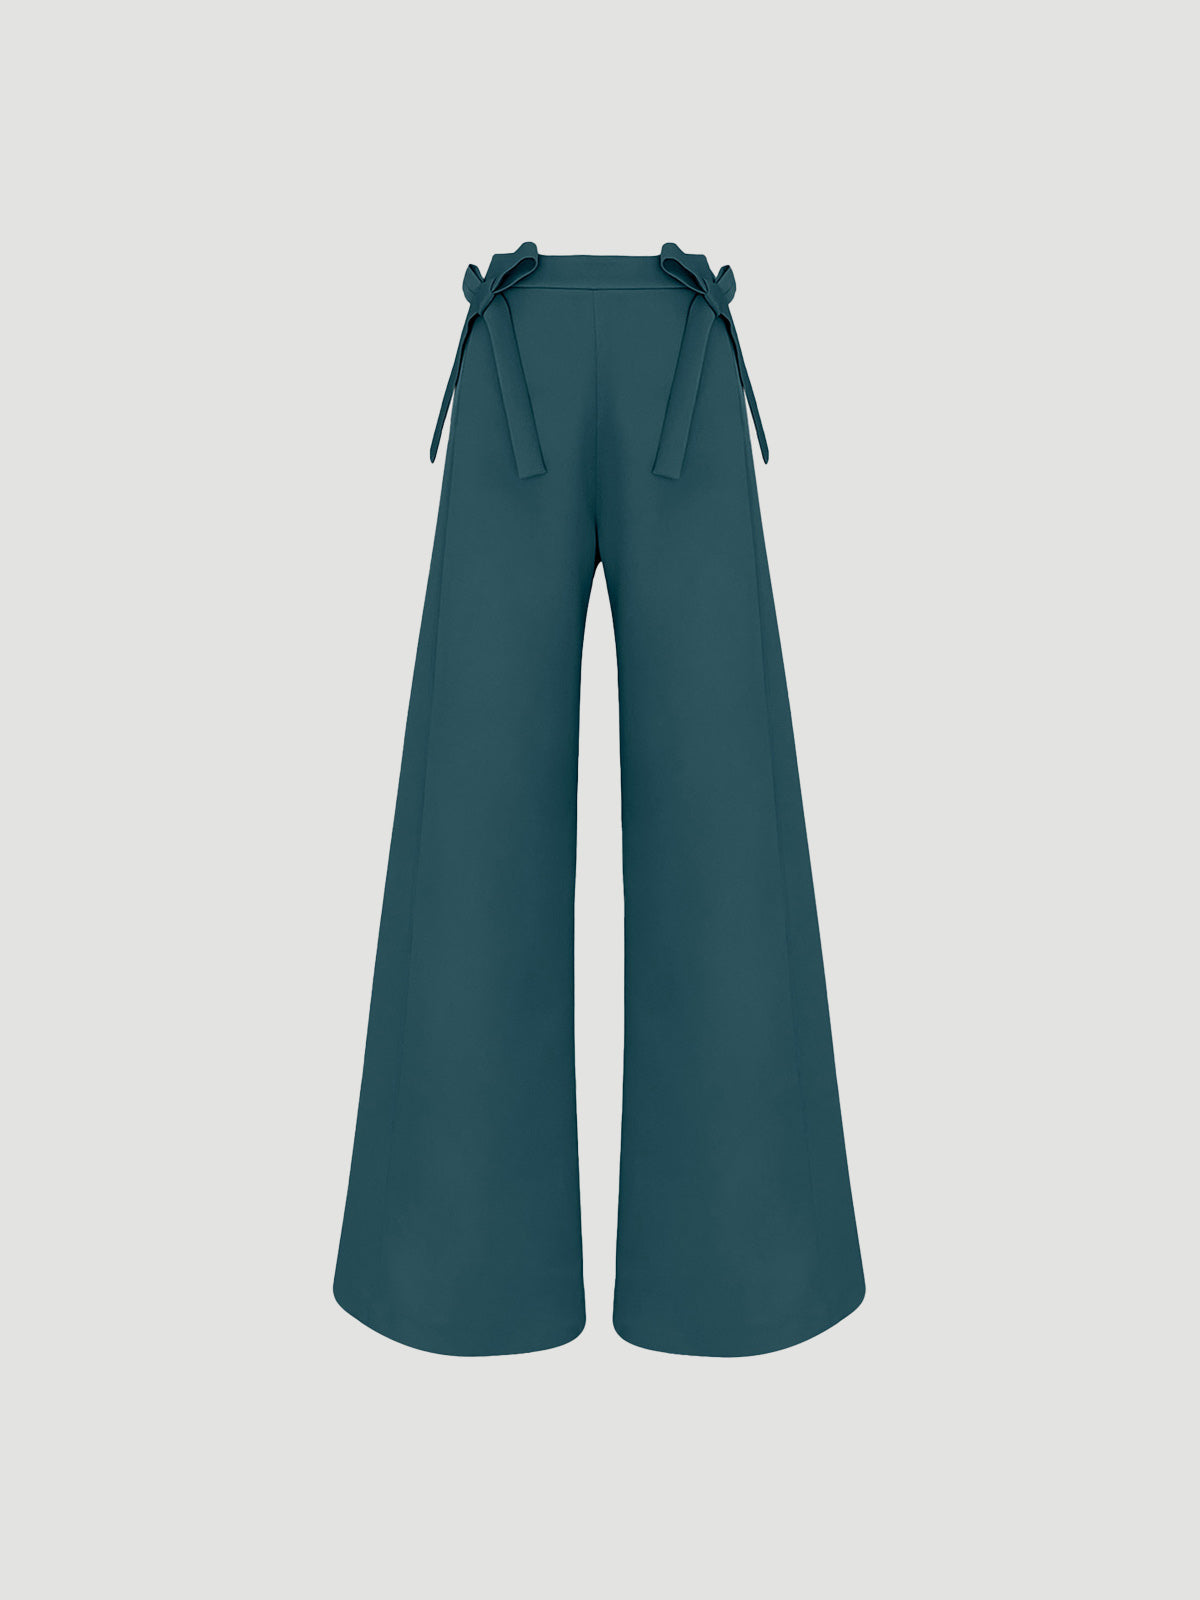 Mineral green Kodo pants